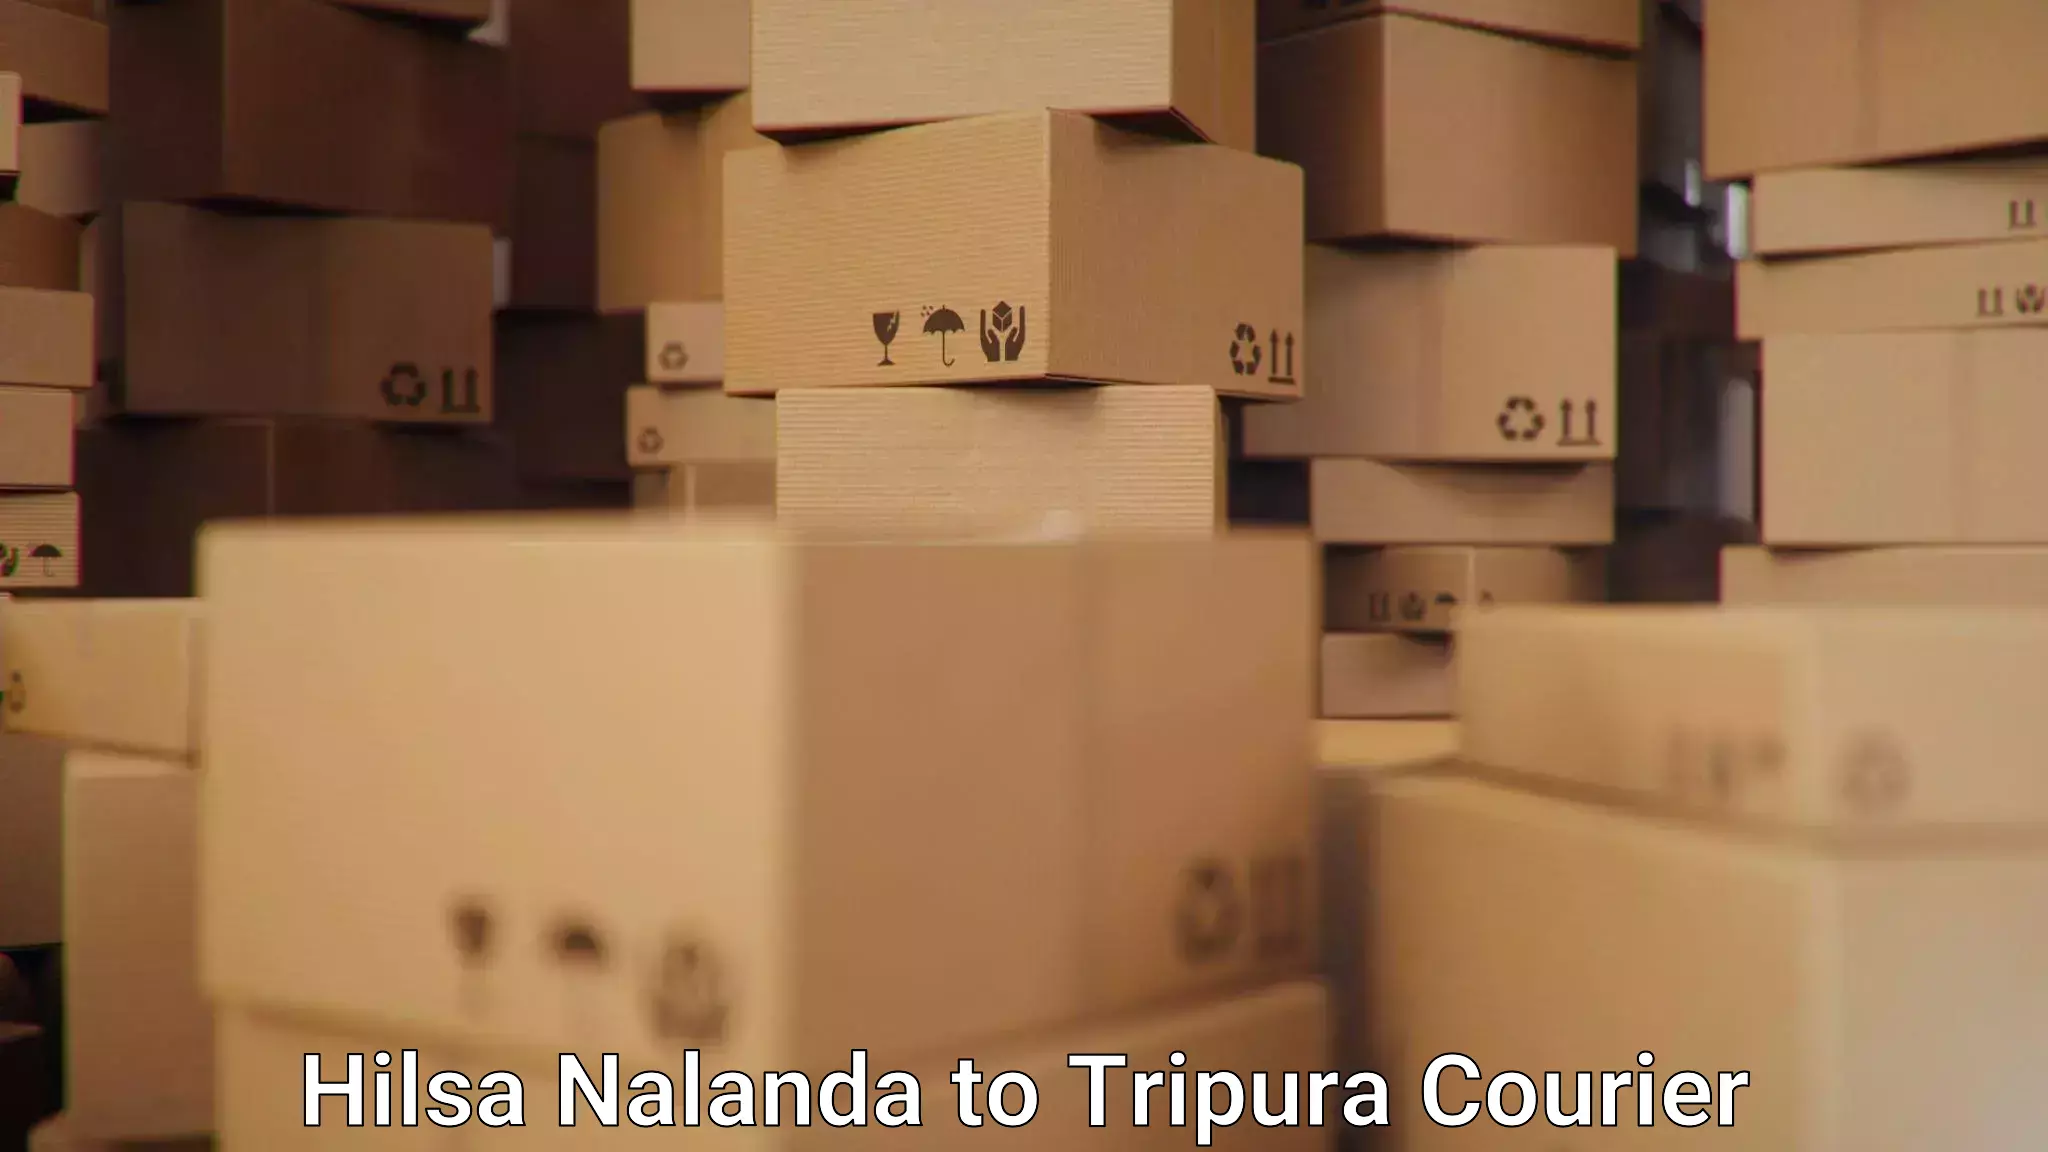 Express delivery network Hilsa Nalanda to Agartala